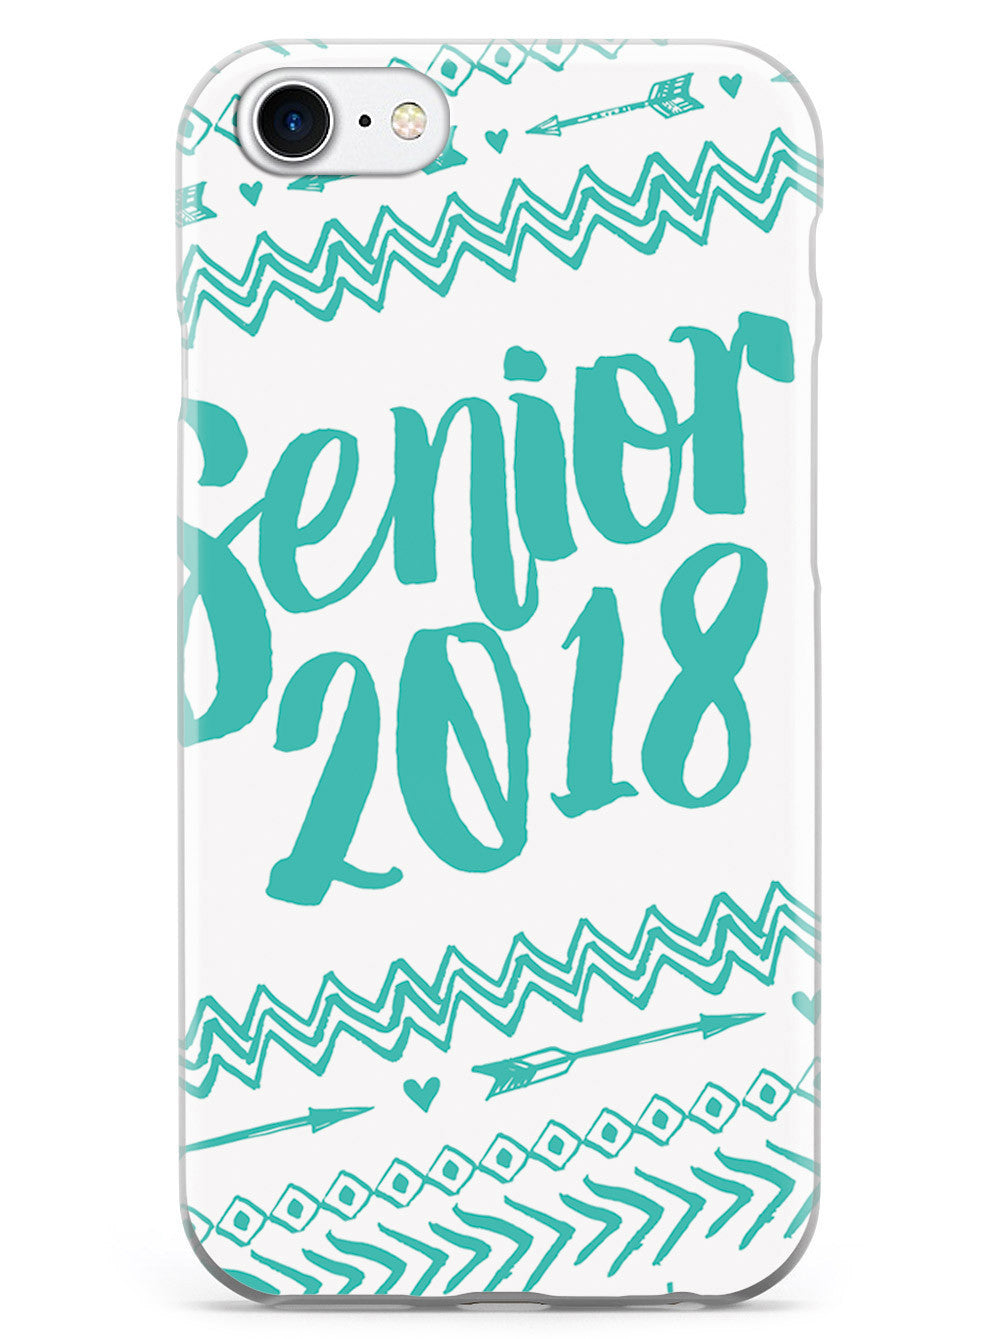 Senior 2018 - Teal Case